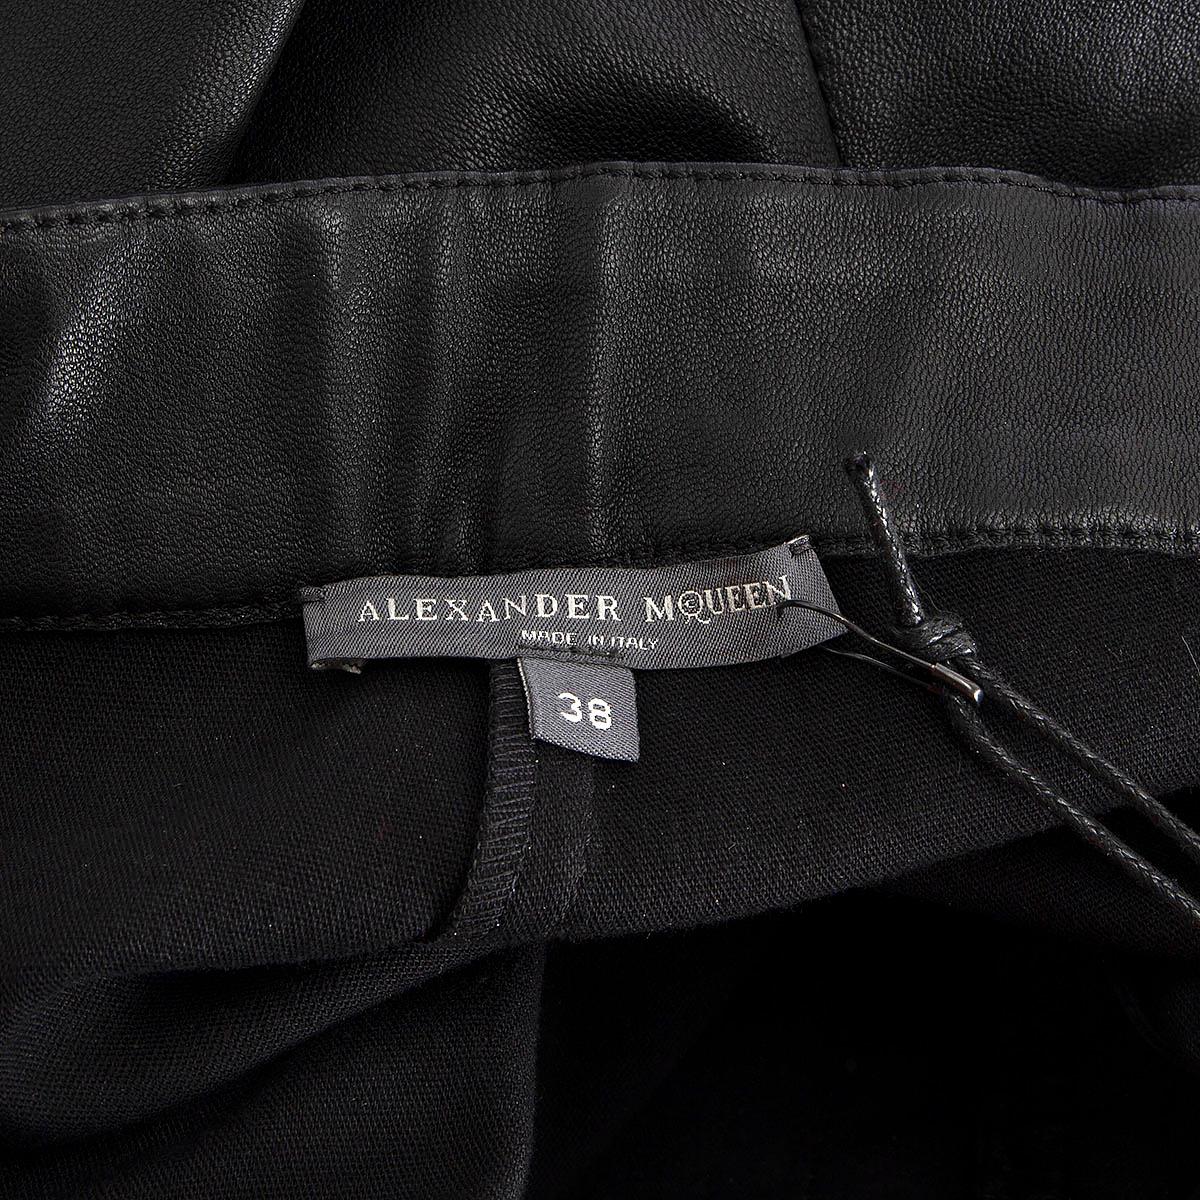 ALEXANDER MCQUEEN black leather FLORAL STRIPE MOTO ZIP Pants 38 XS In Excellent Condition For Sale In Zürich, CH